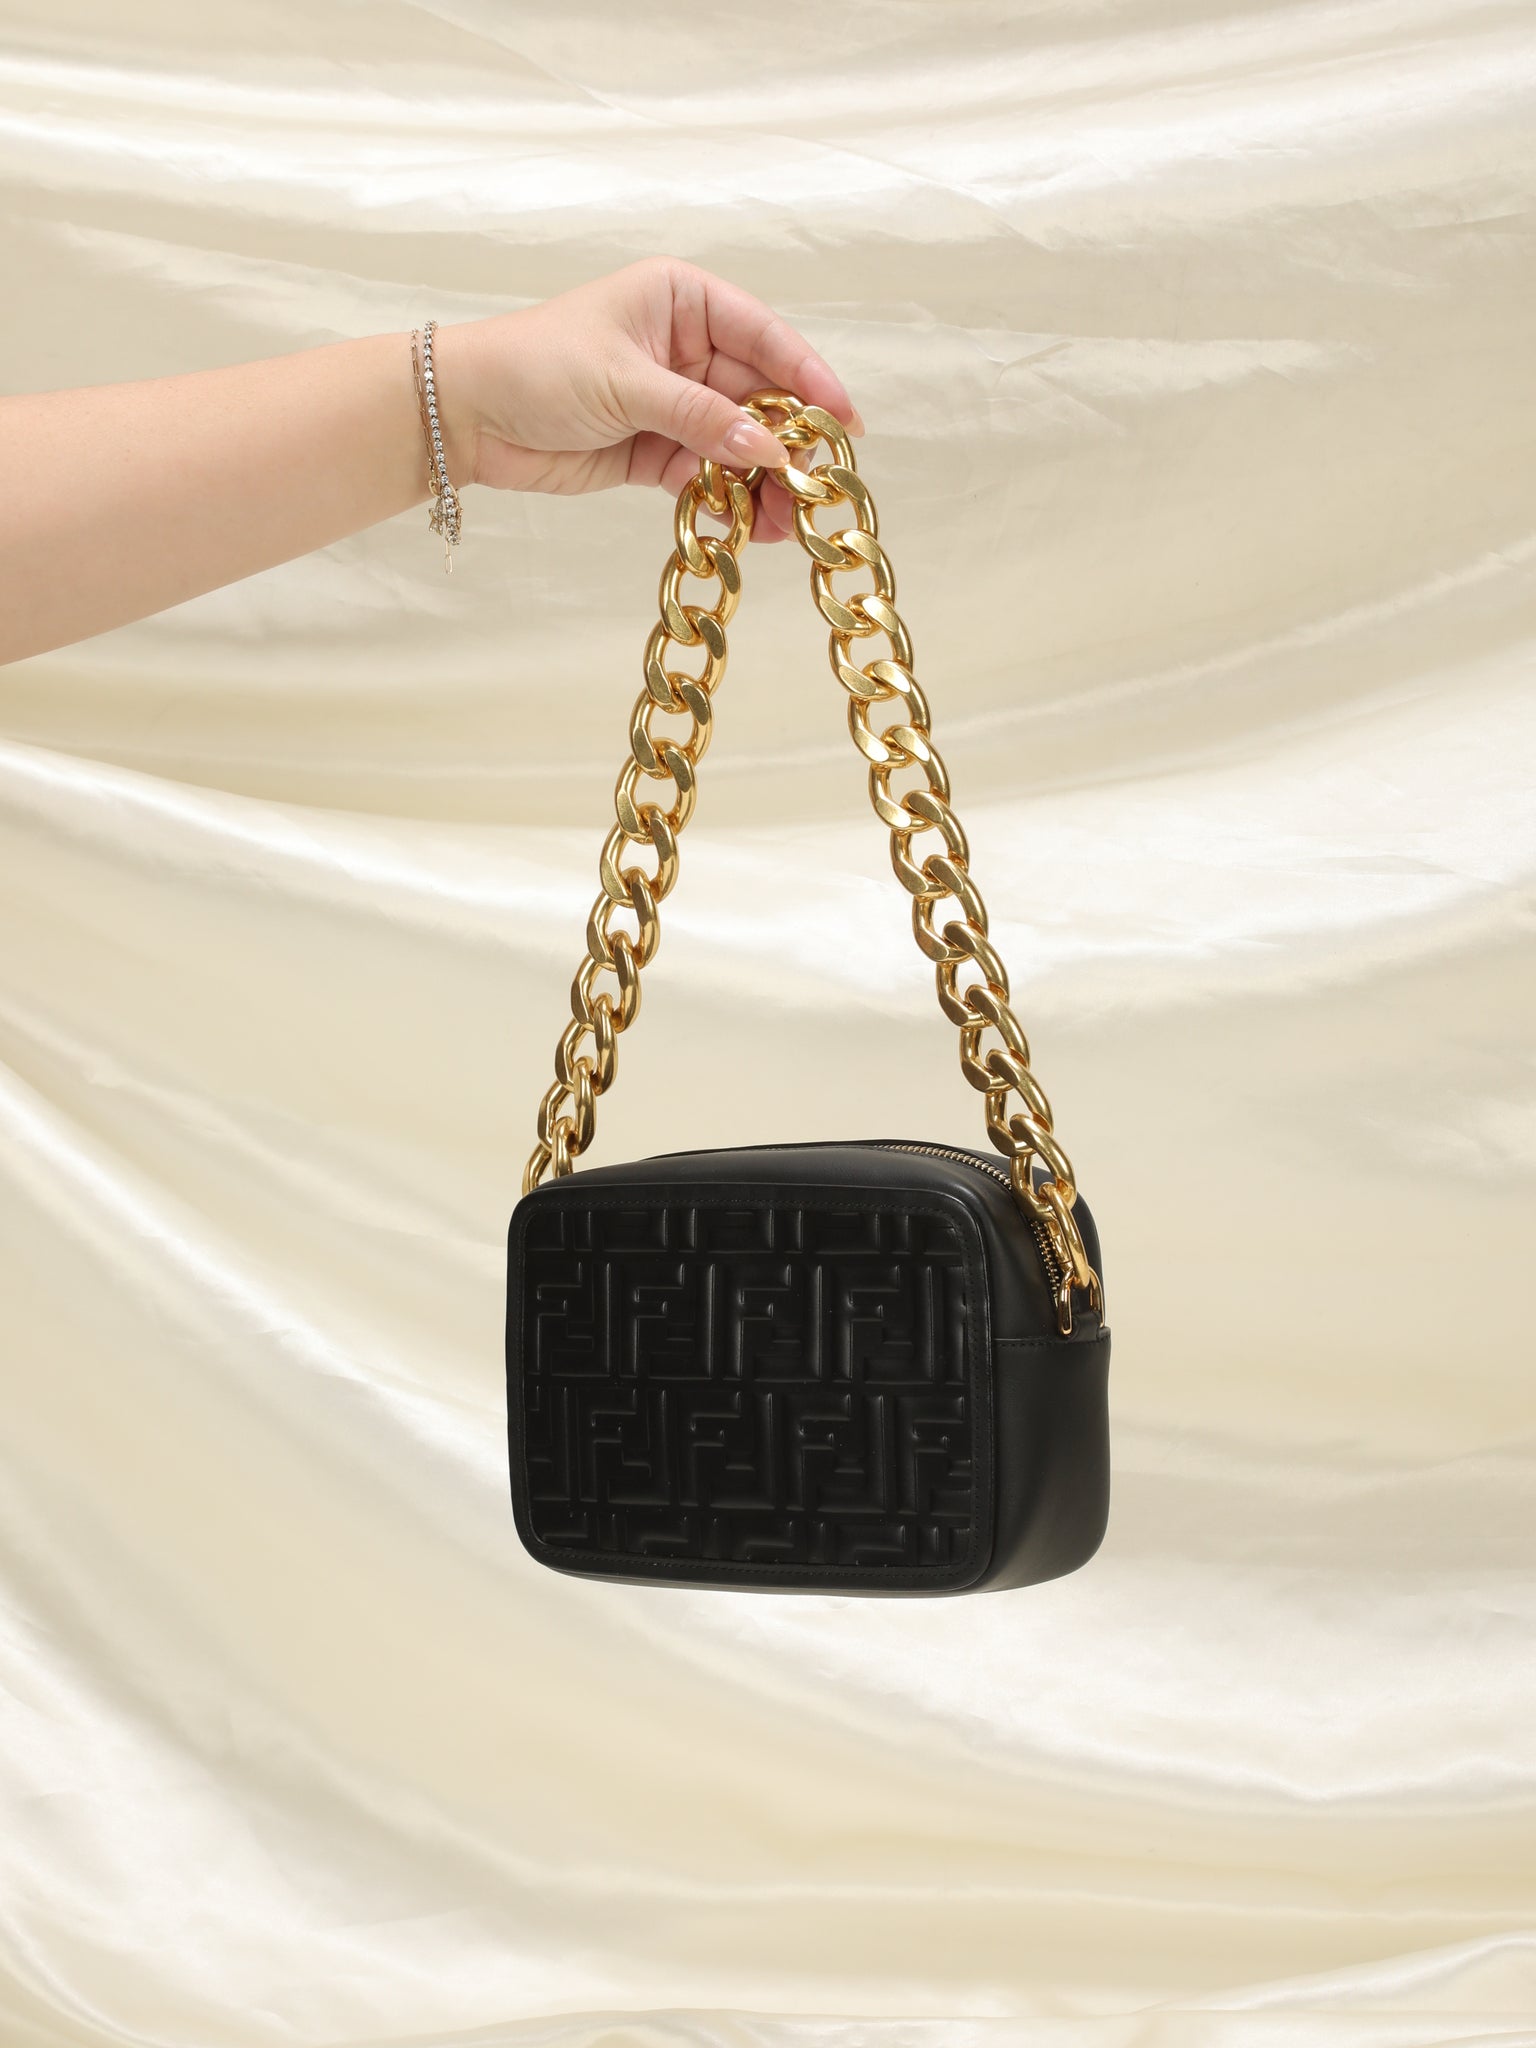 Fendi - Black Leather Camera Crossbody Bag